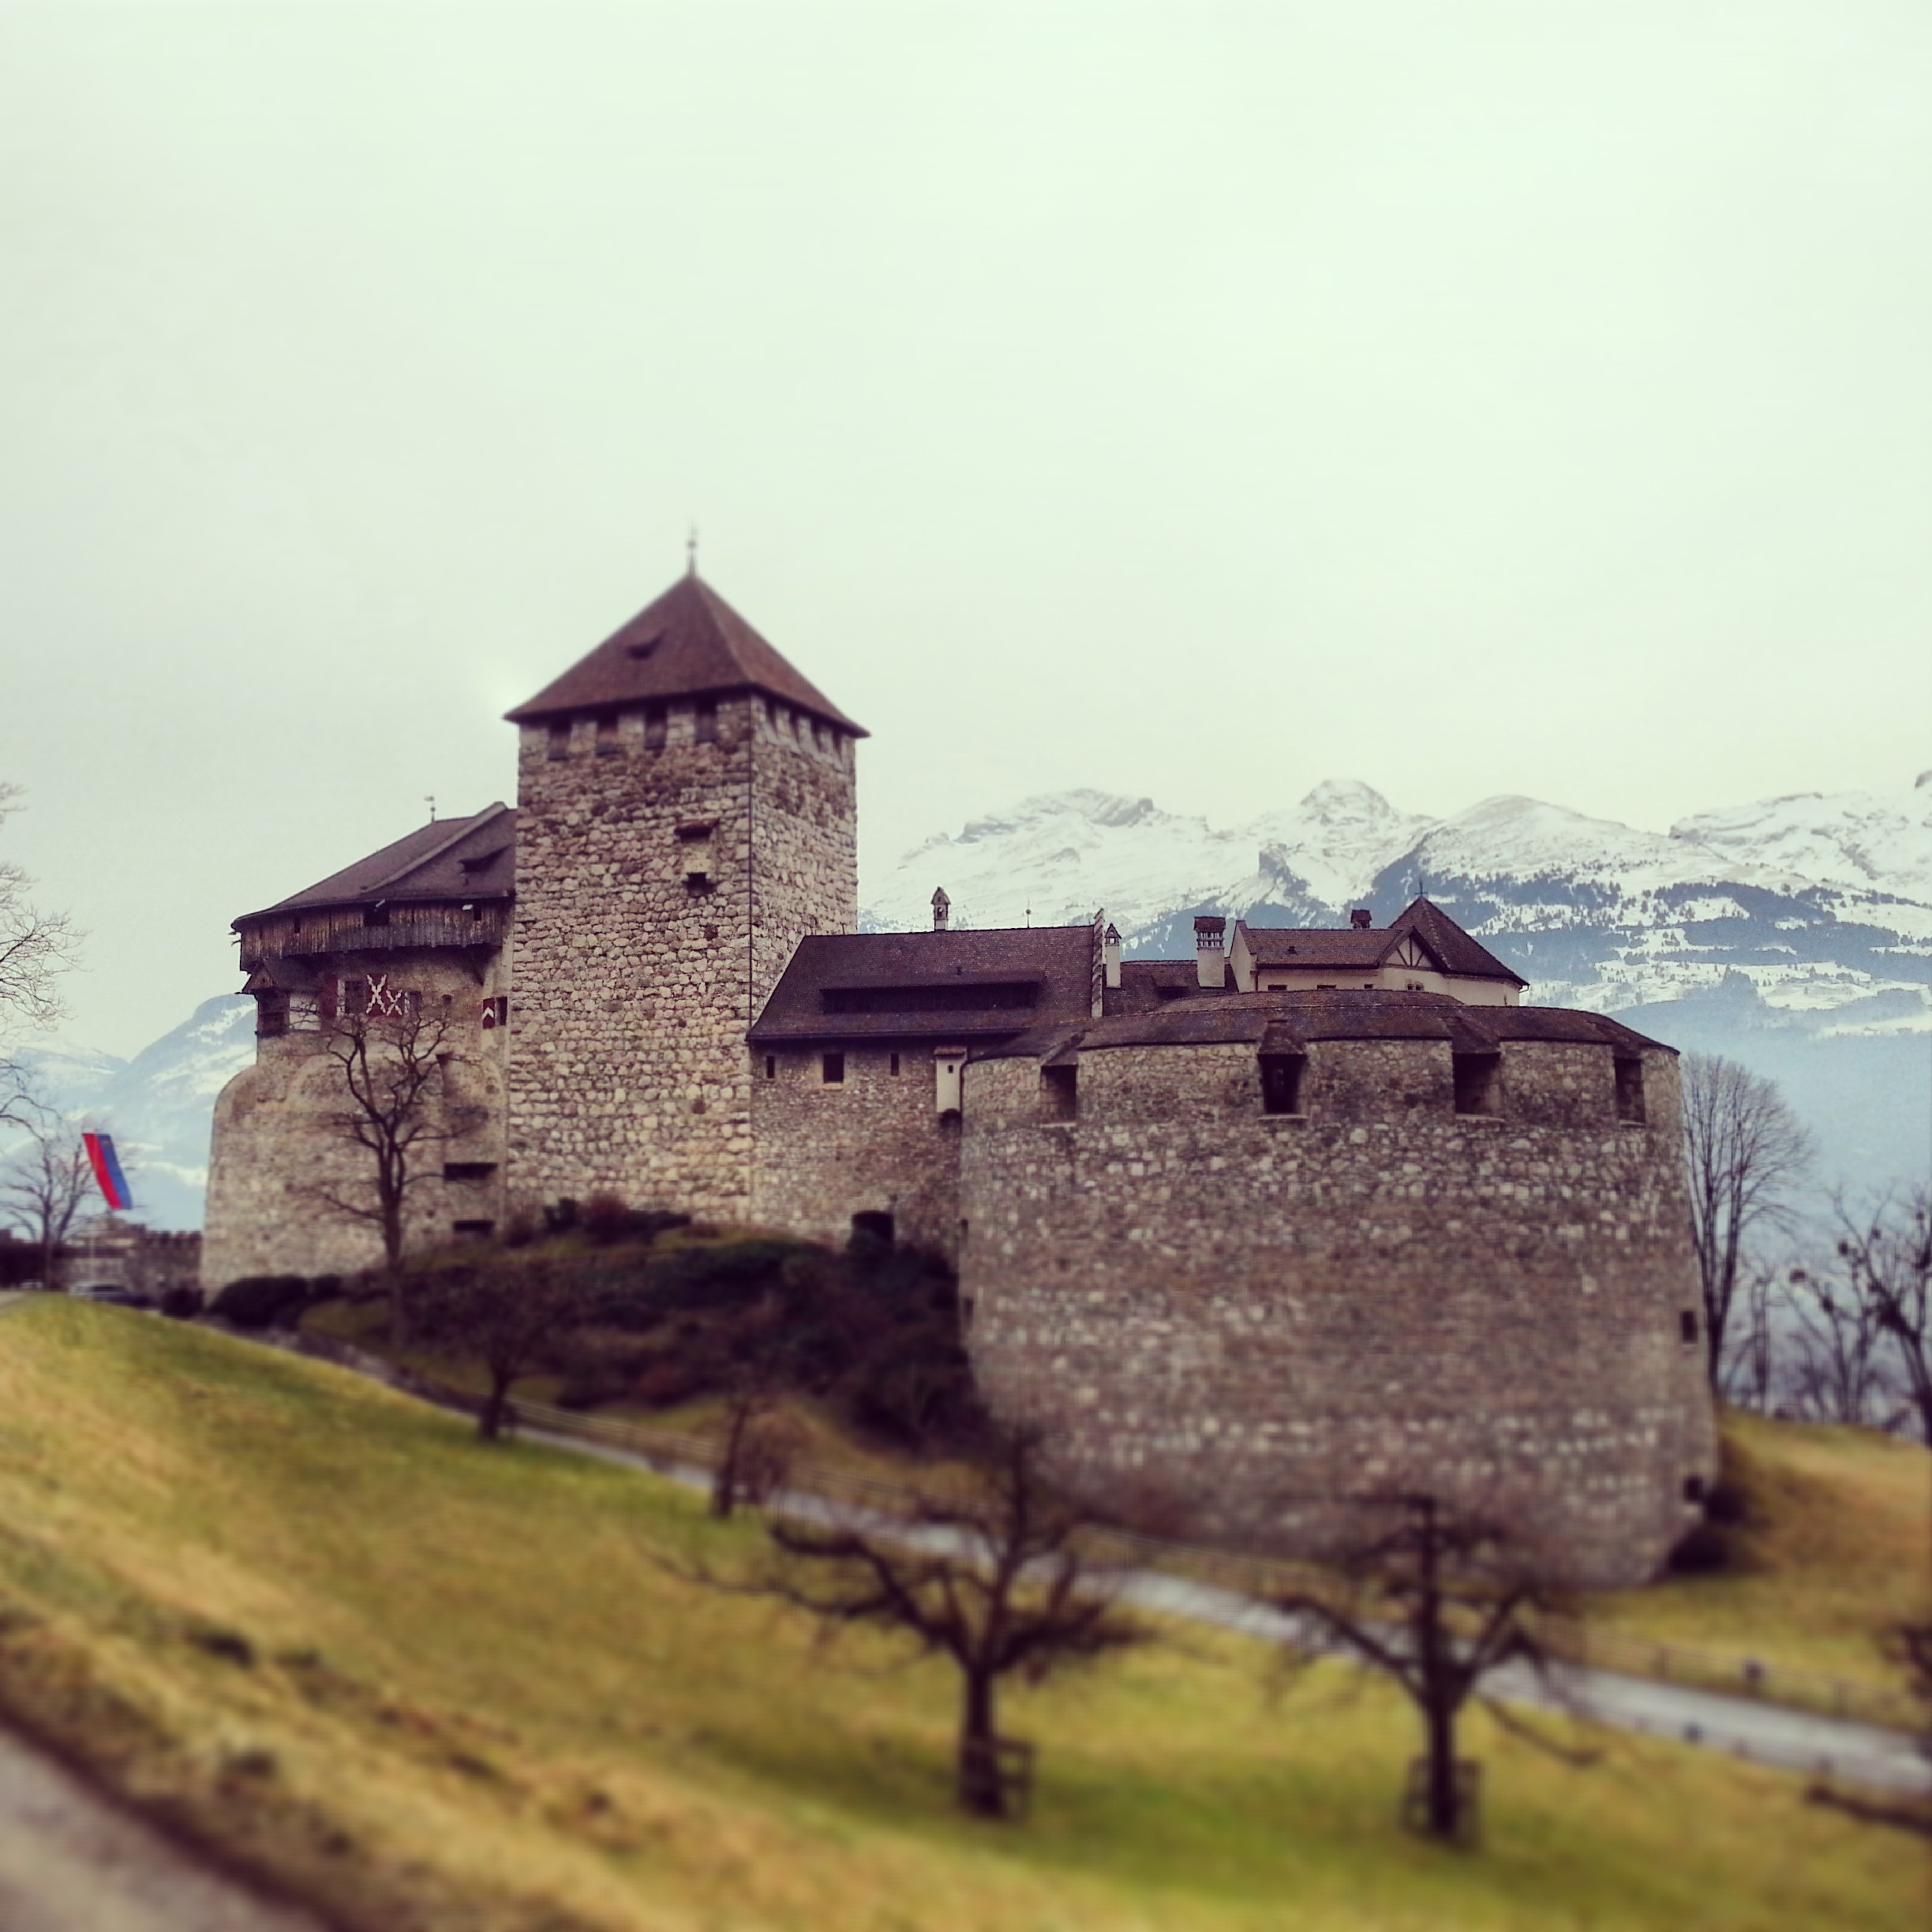 Fairy tale castles in Europe - Vaduz